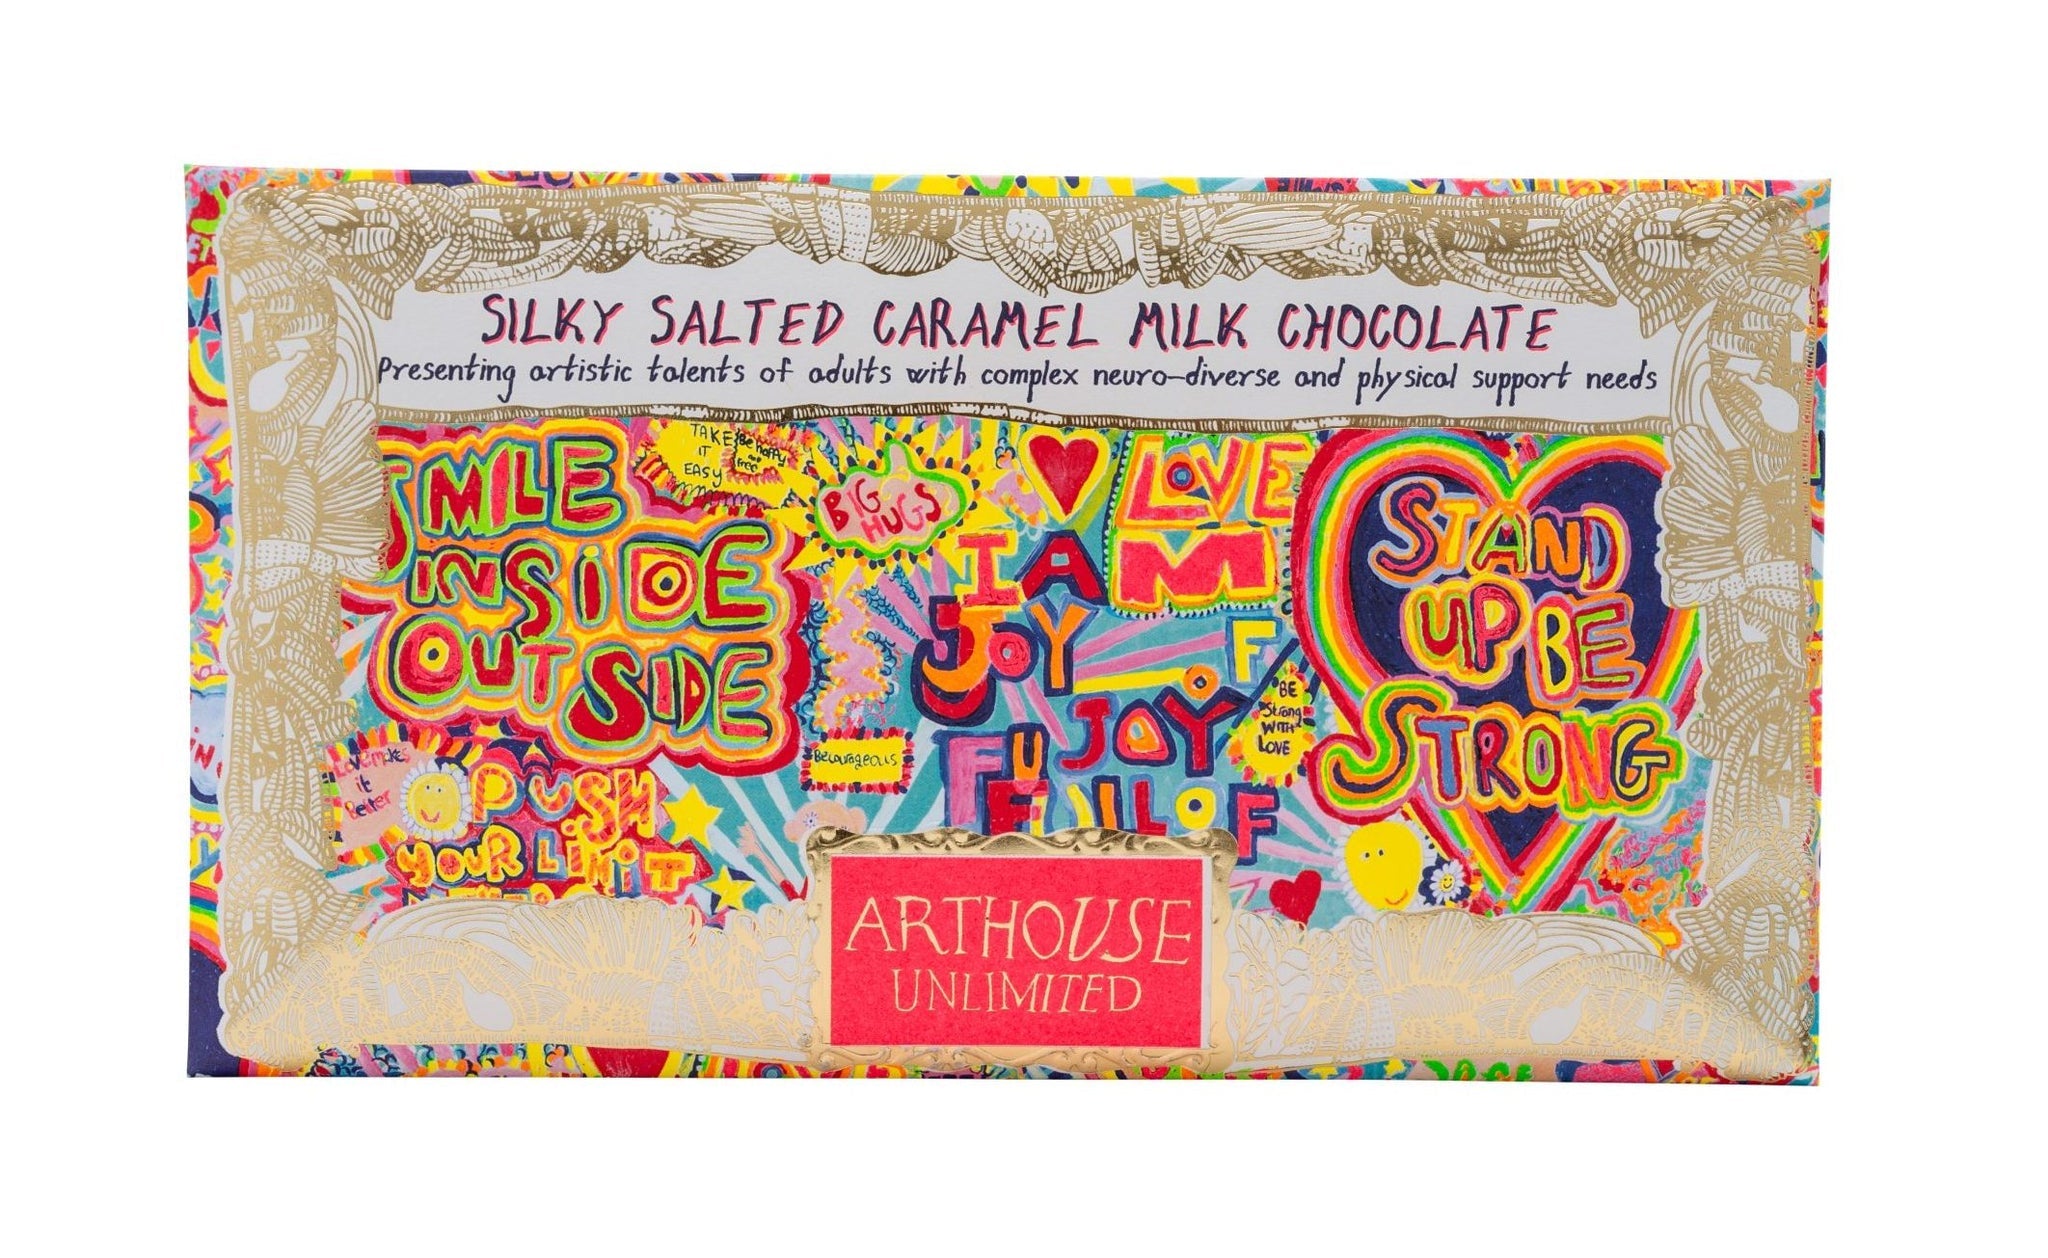 Arthouse Unlimited Chocolate - Full of Joy Silky Salted Caramel Milk Chocolate